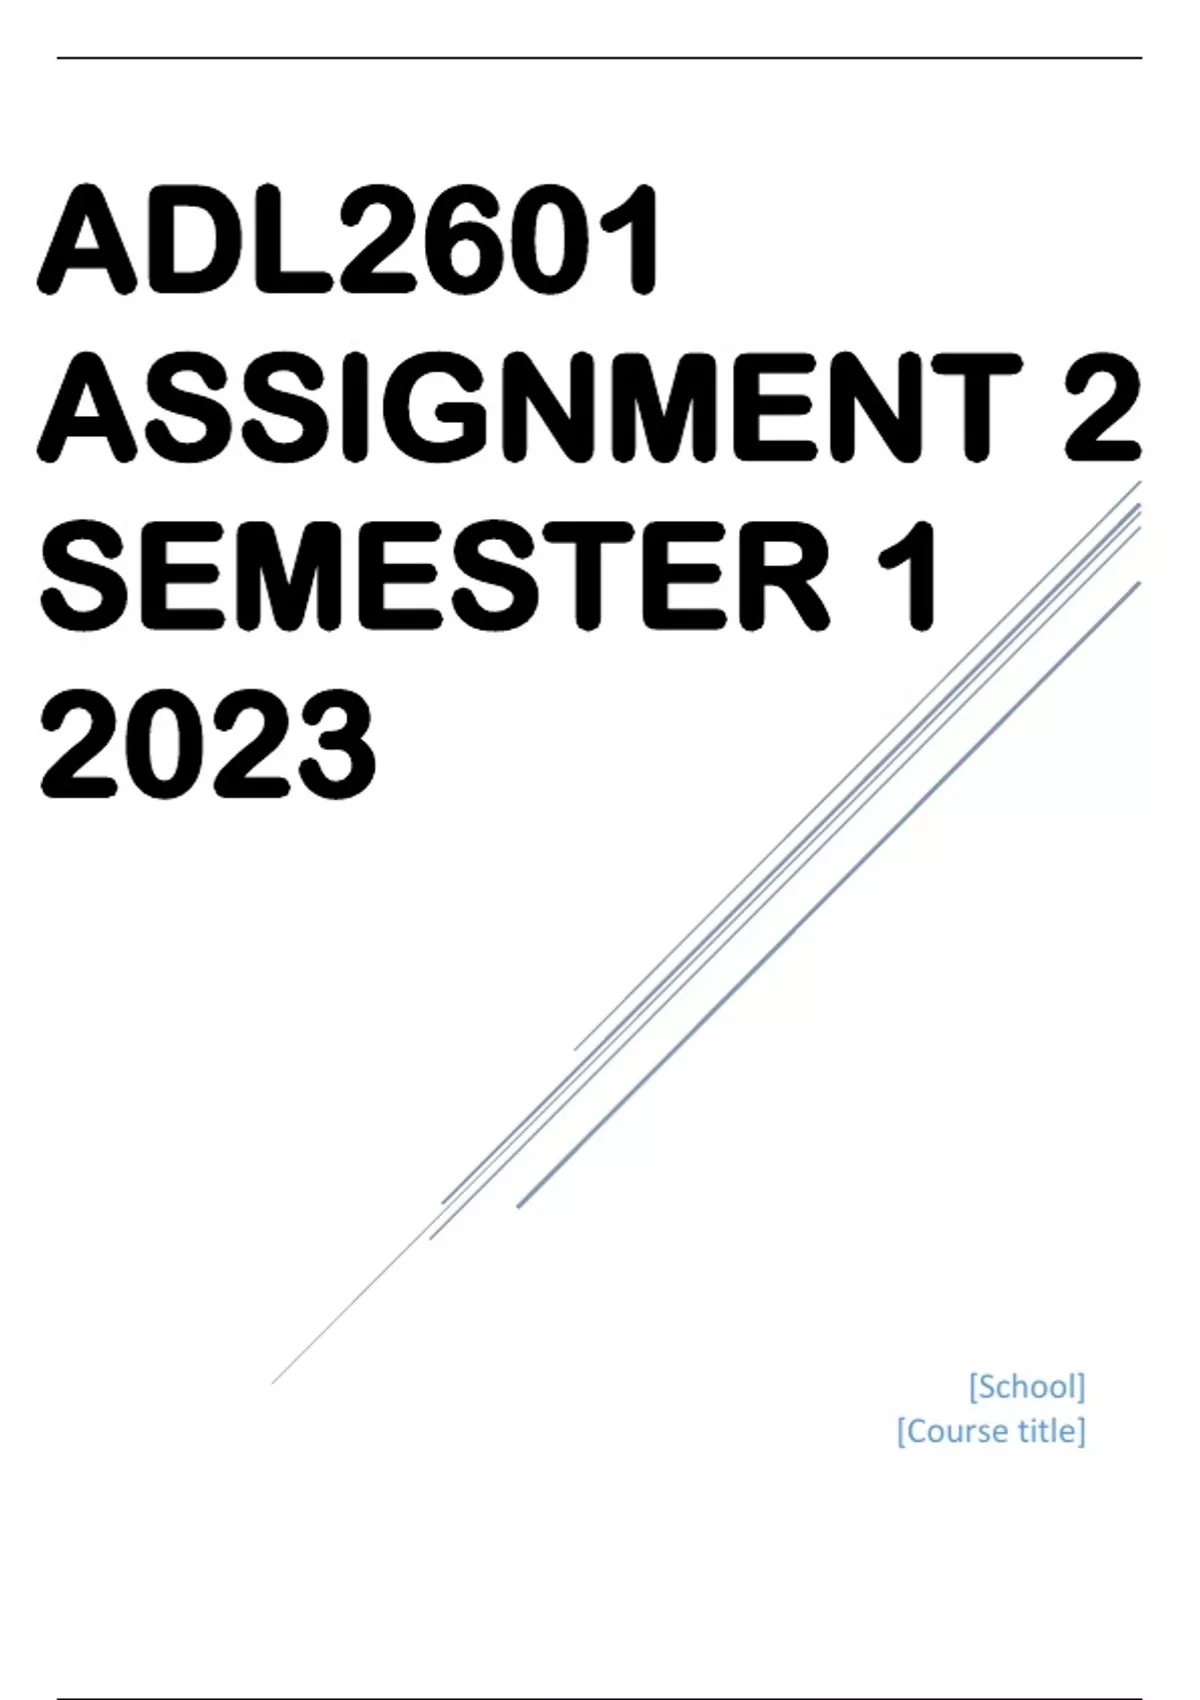 adl2601 assignment 1 2023